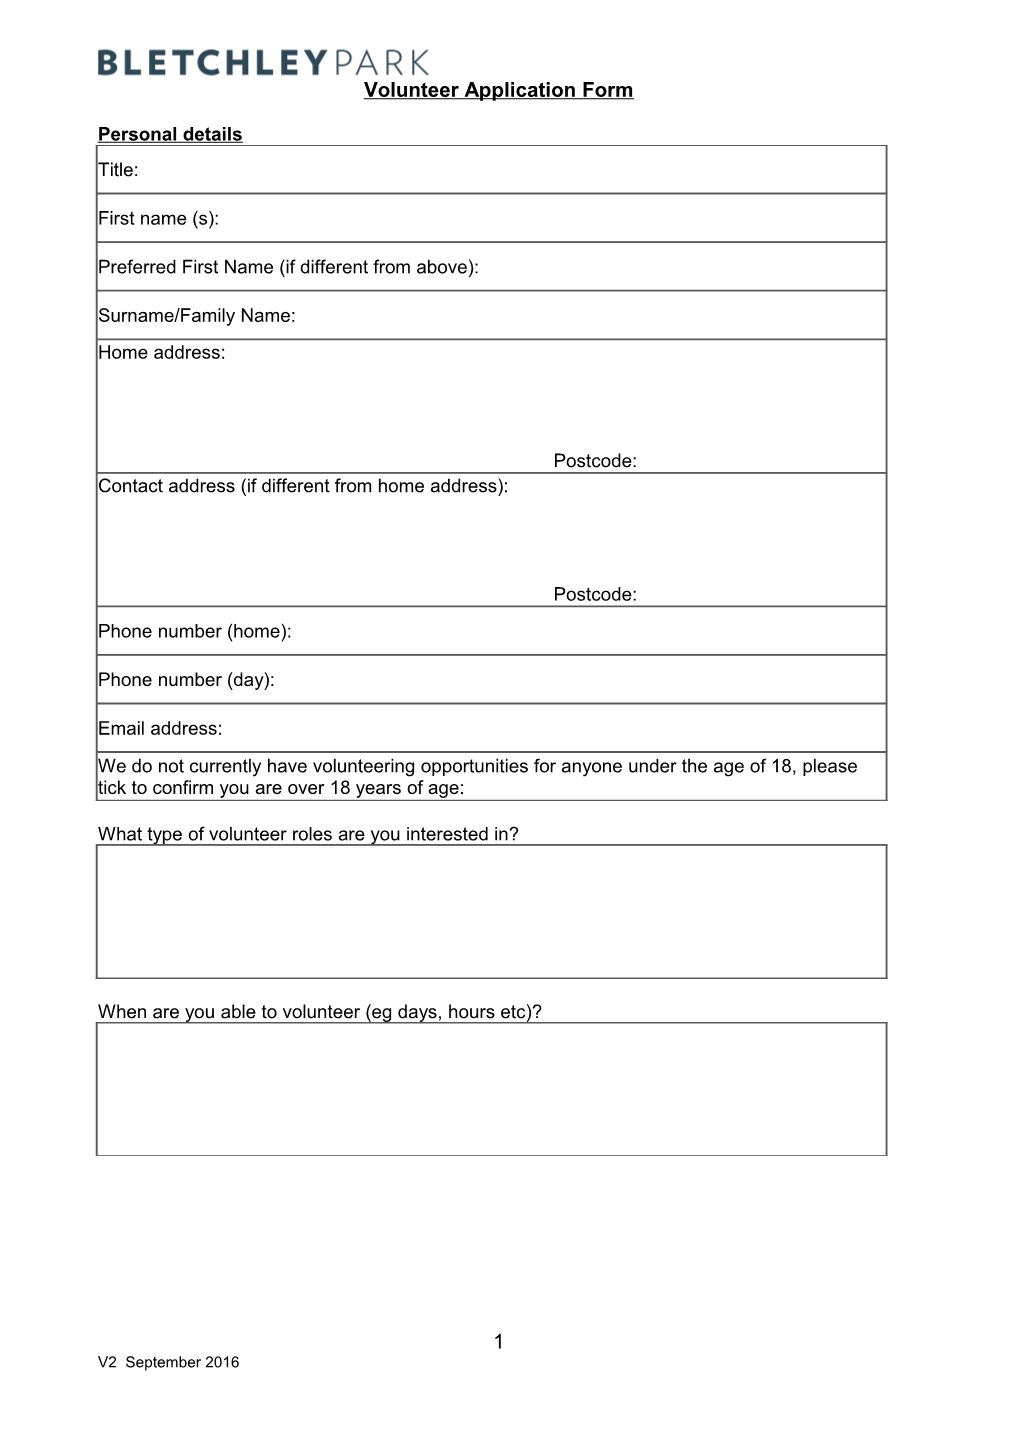 Glasgow Museums Volunteer Application Form